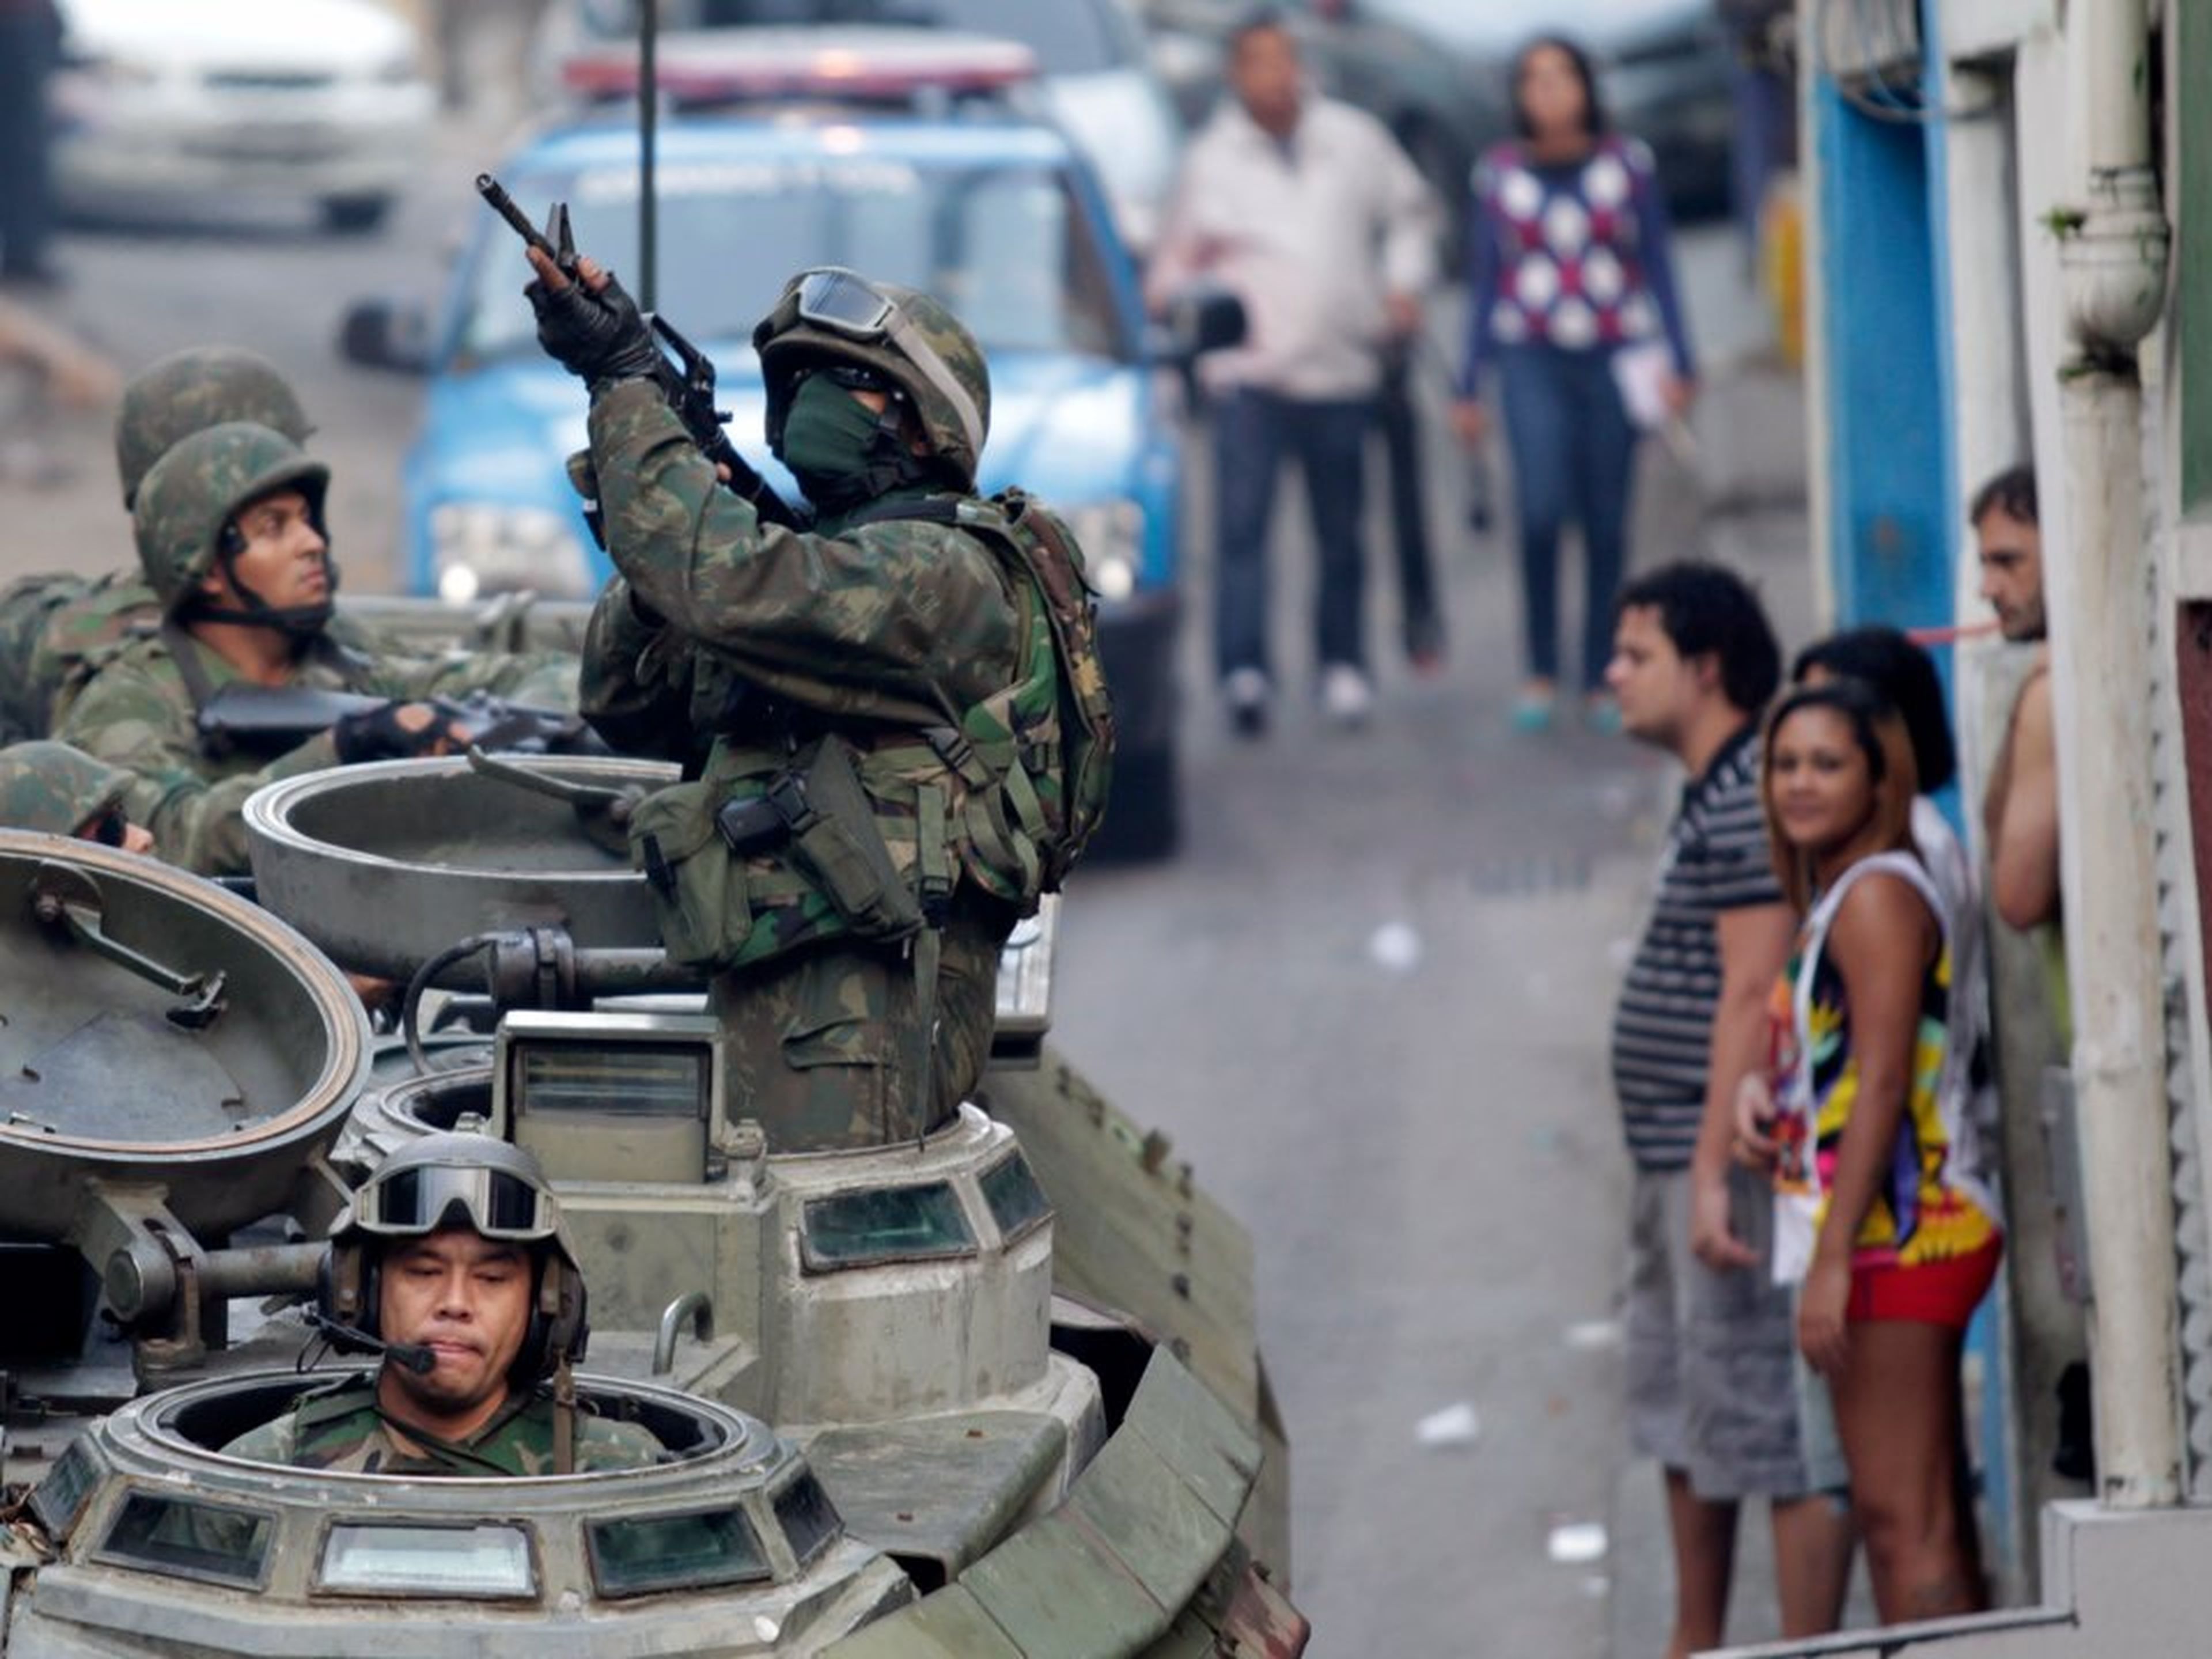 Patrulla del ejército brasileño en la favela de Mangueira de Río de Janeiro.